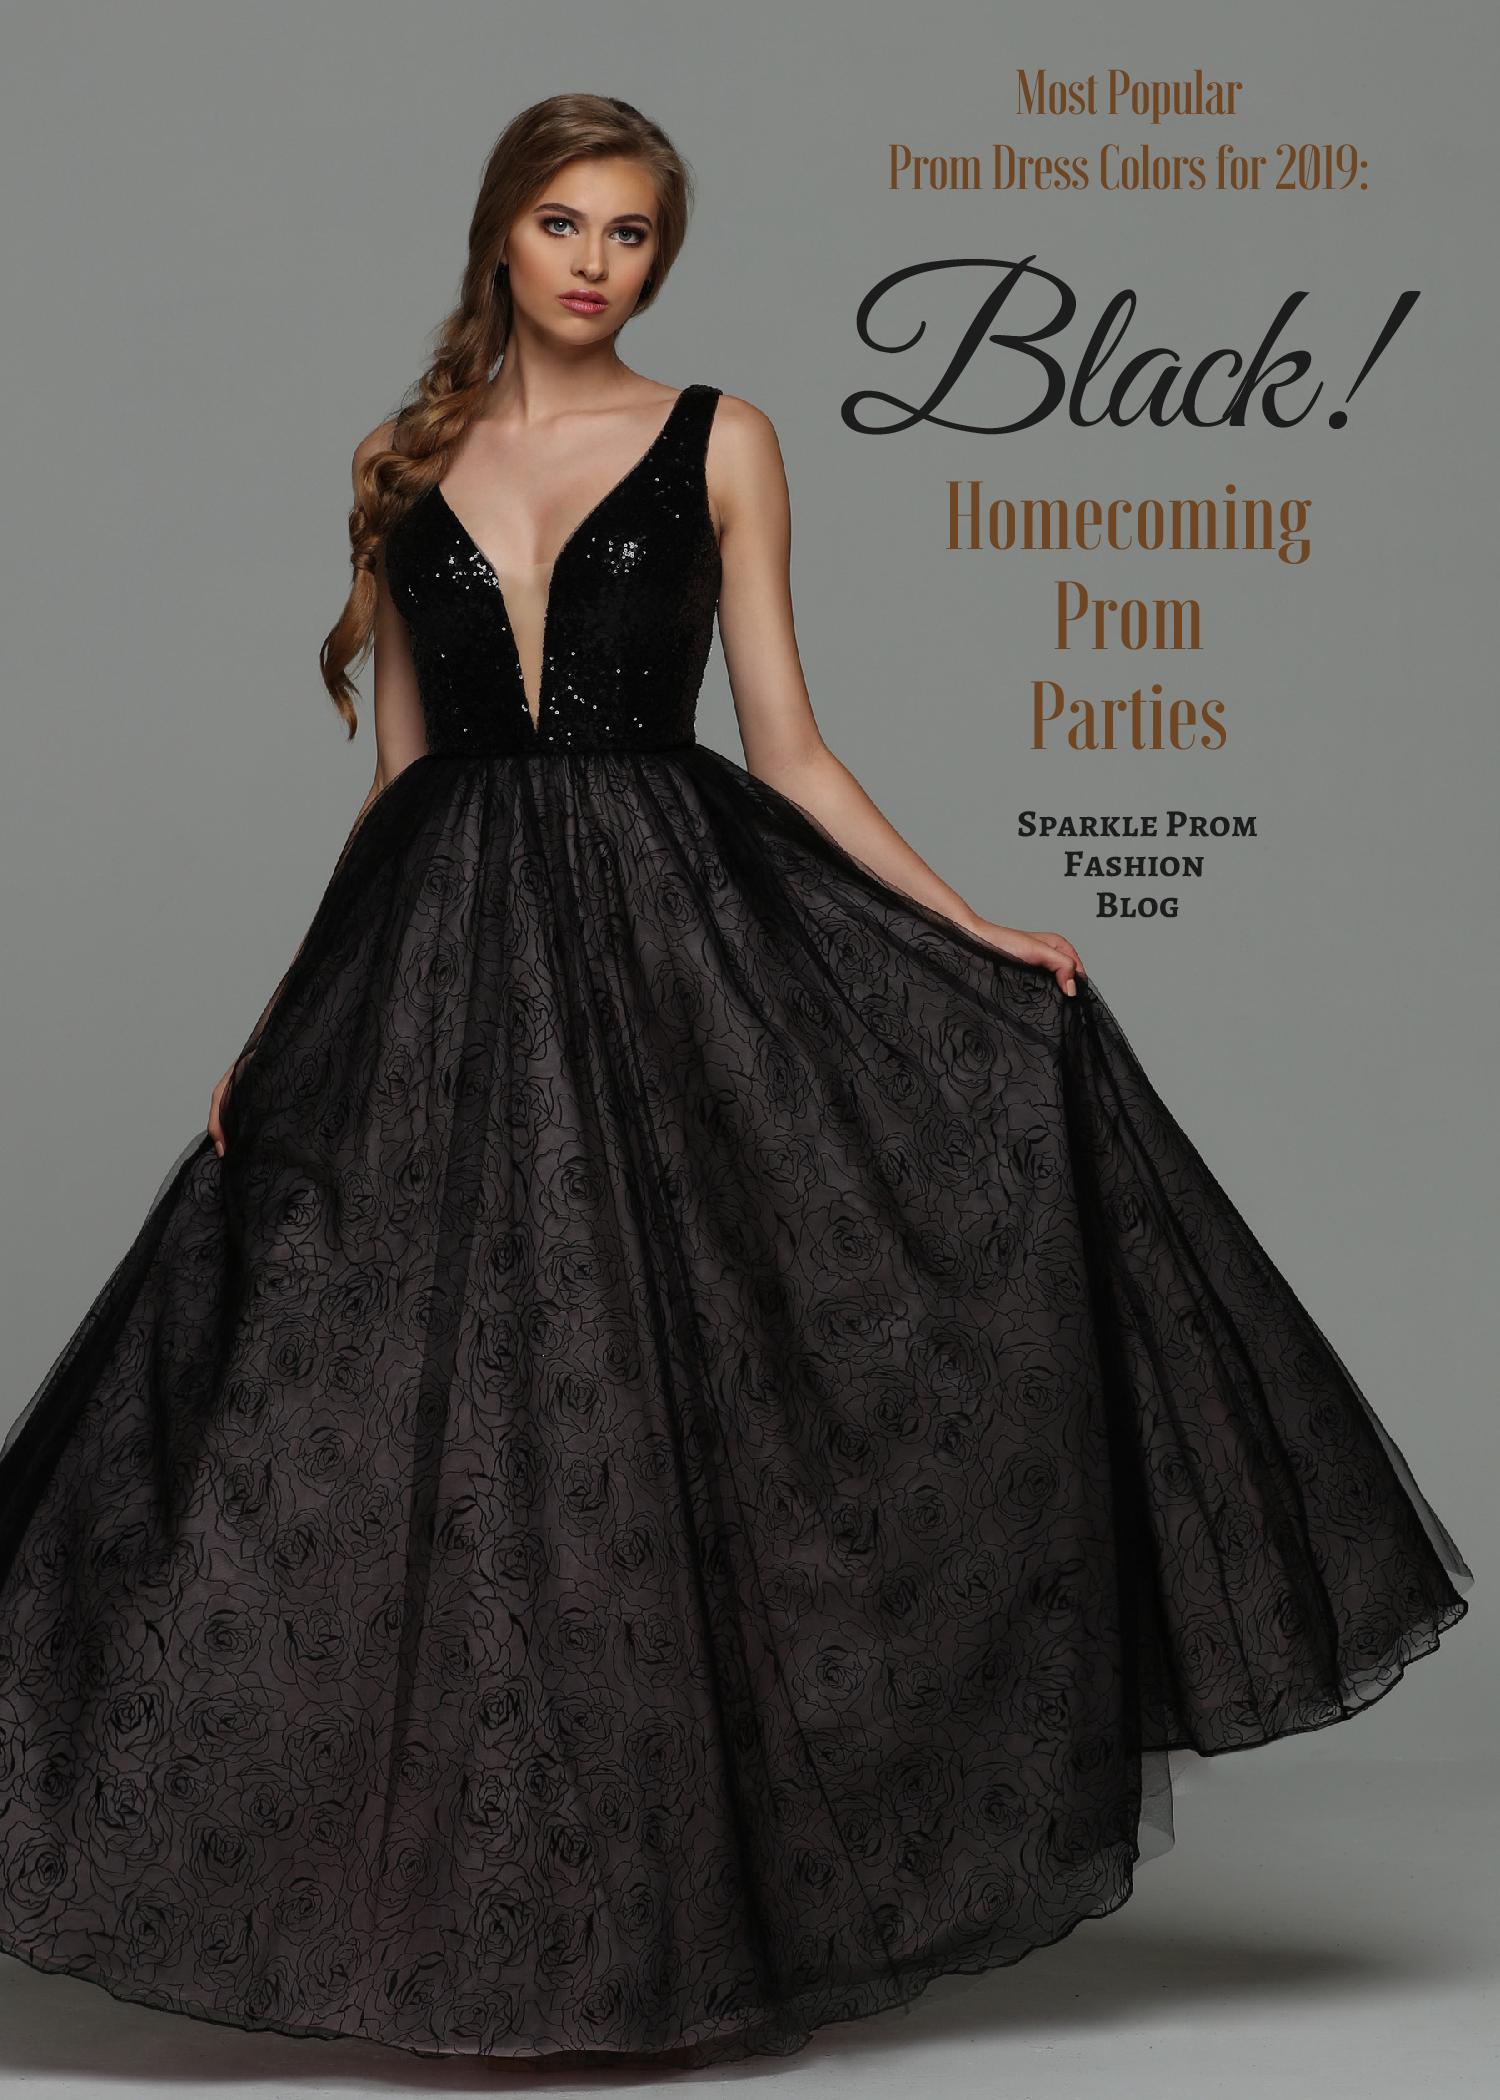 Most Popular Prom Dress Colors for 2019 Black Prom Dresses – Sparkle Prom Fashion Blog